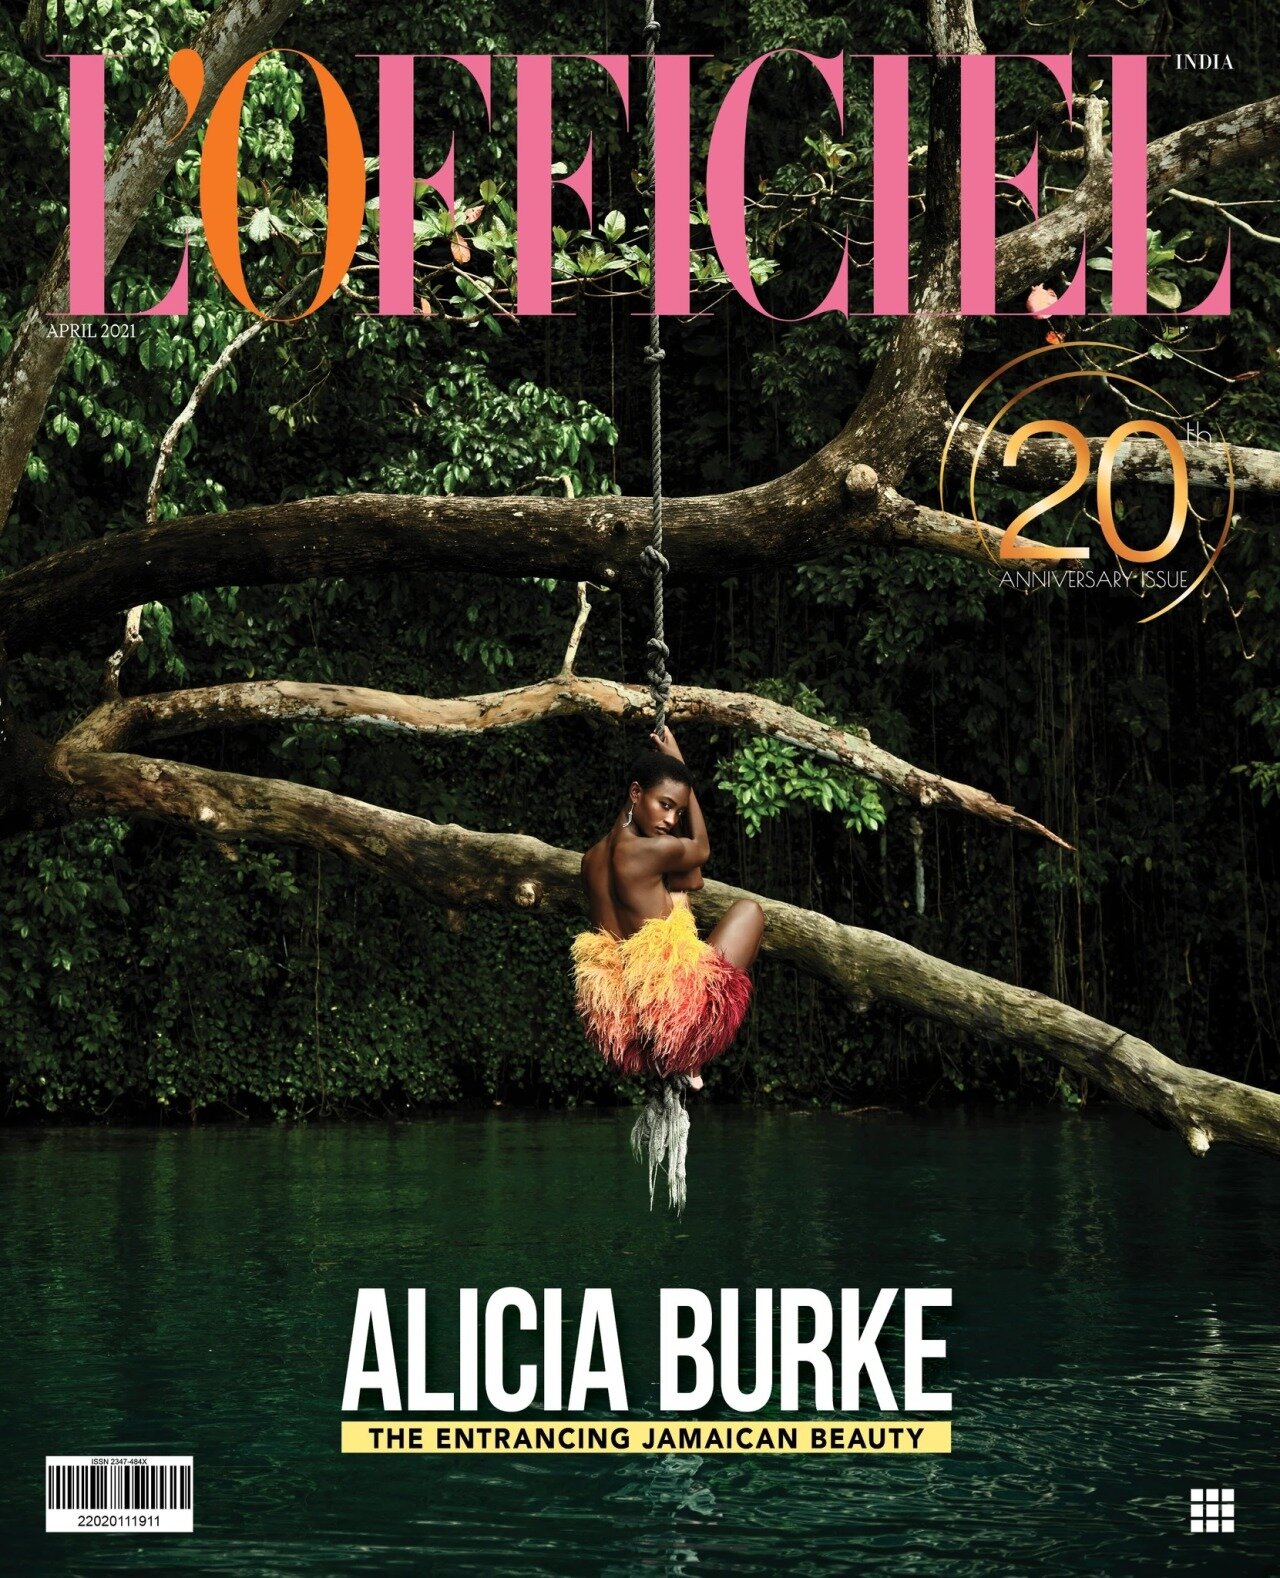 Alicia Burke by JD Barnes for L'Officiel India April 2021 (6).jpg